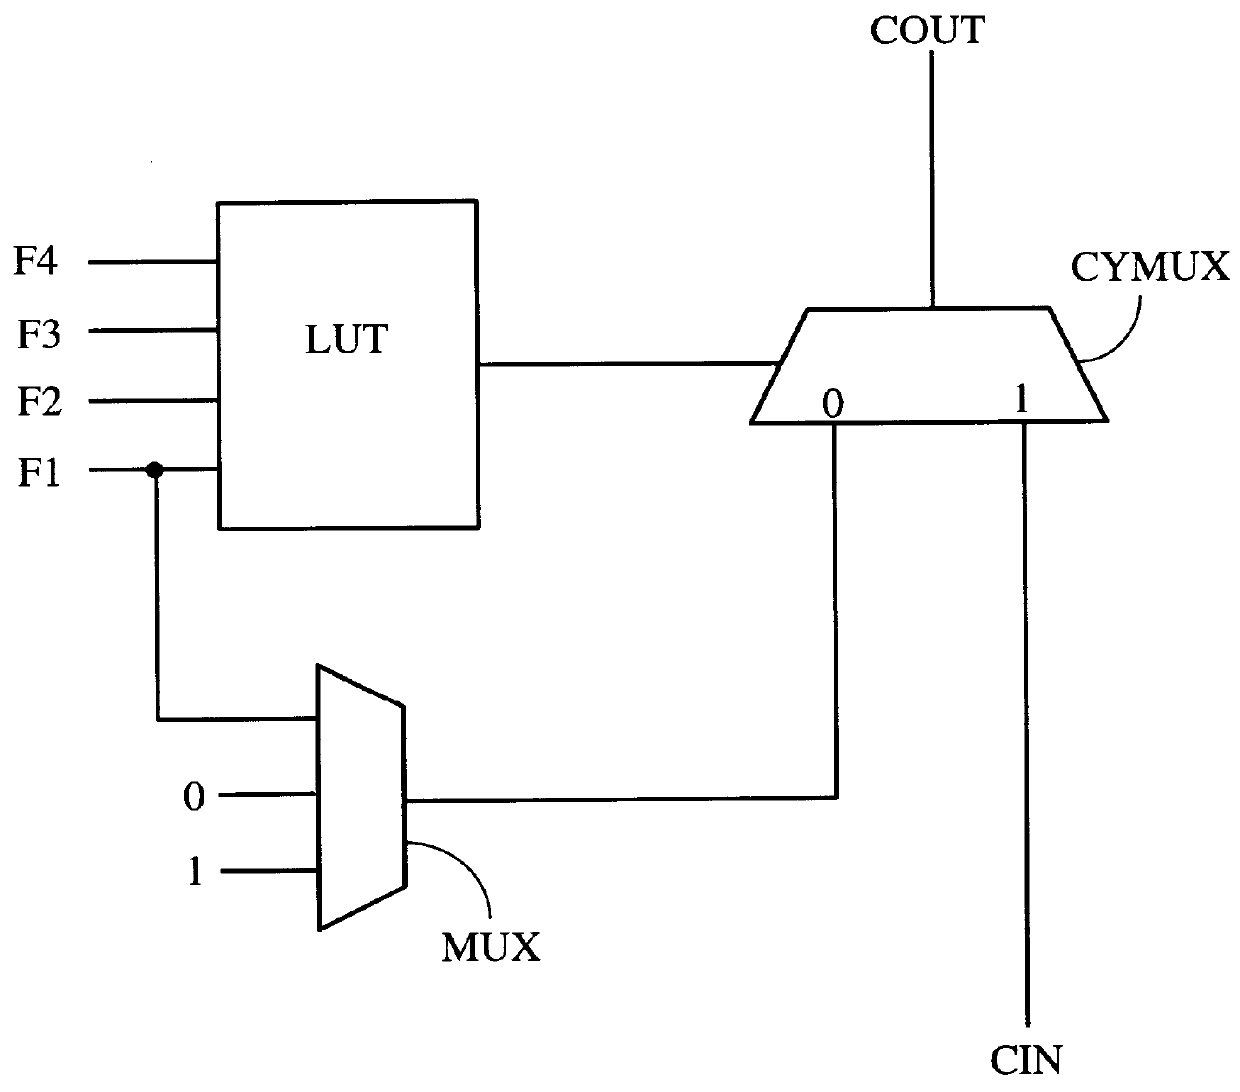 Method for implementing priority encoders using FPGA carry logic